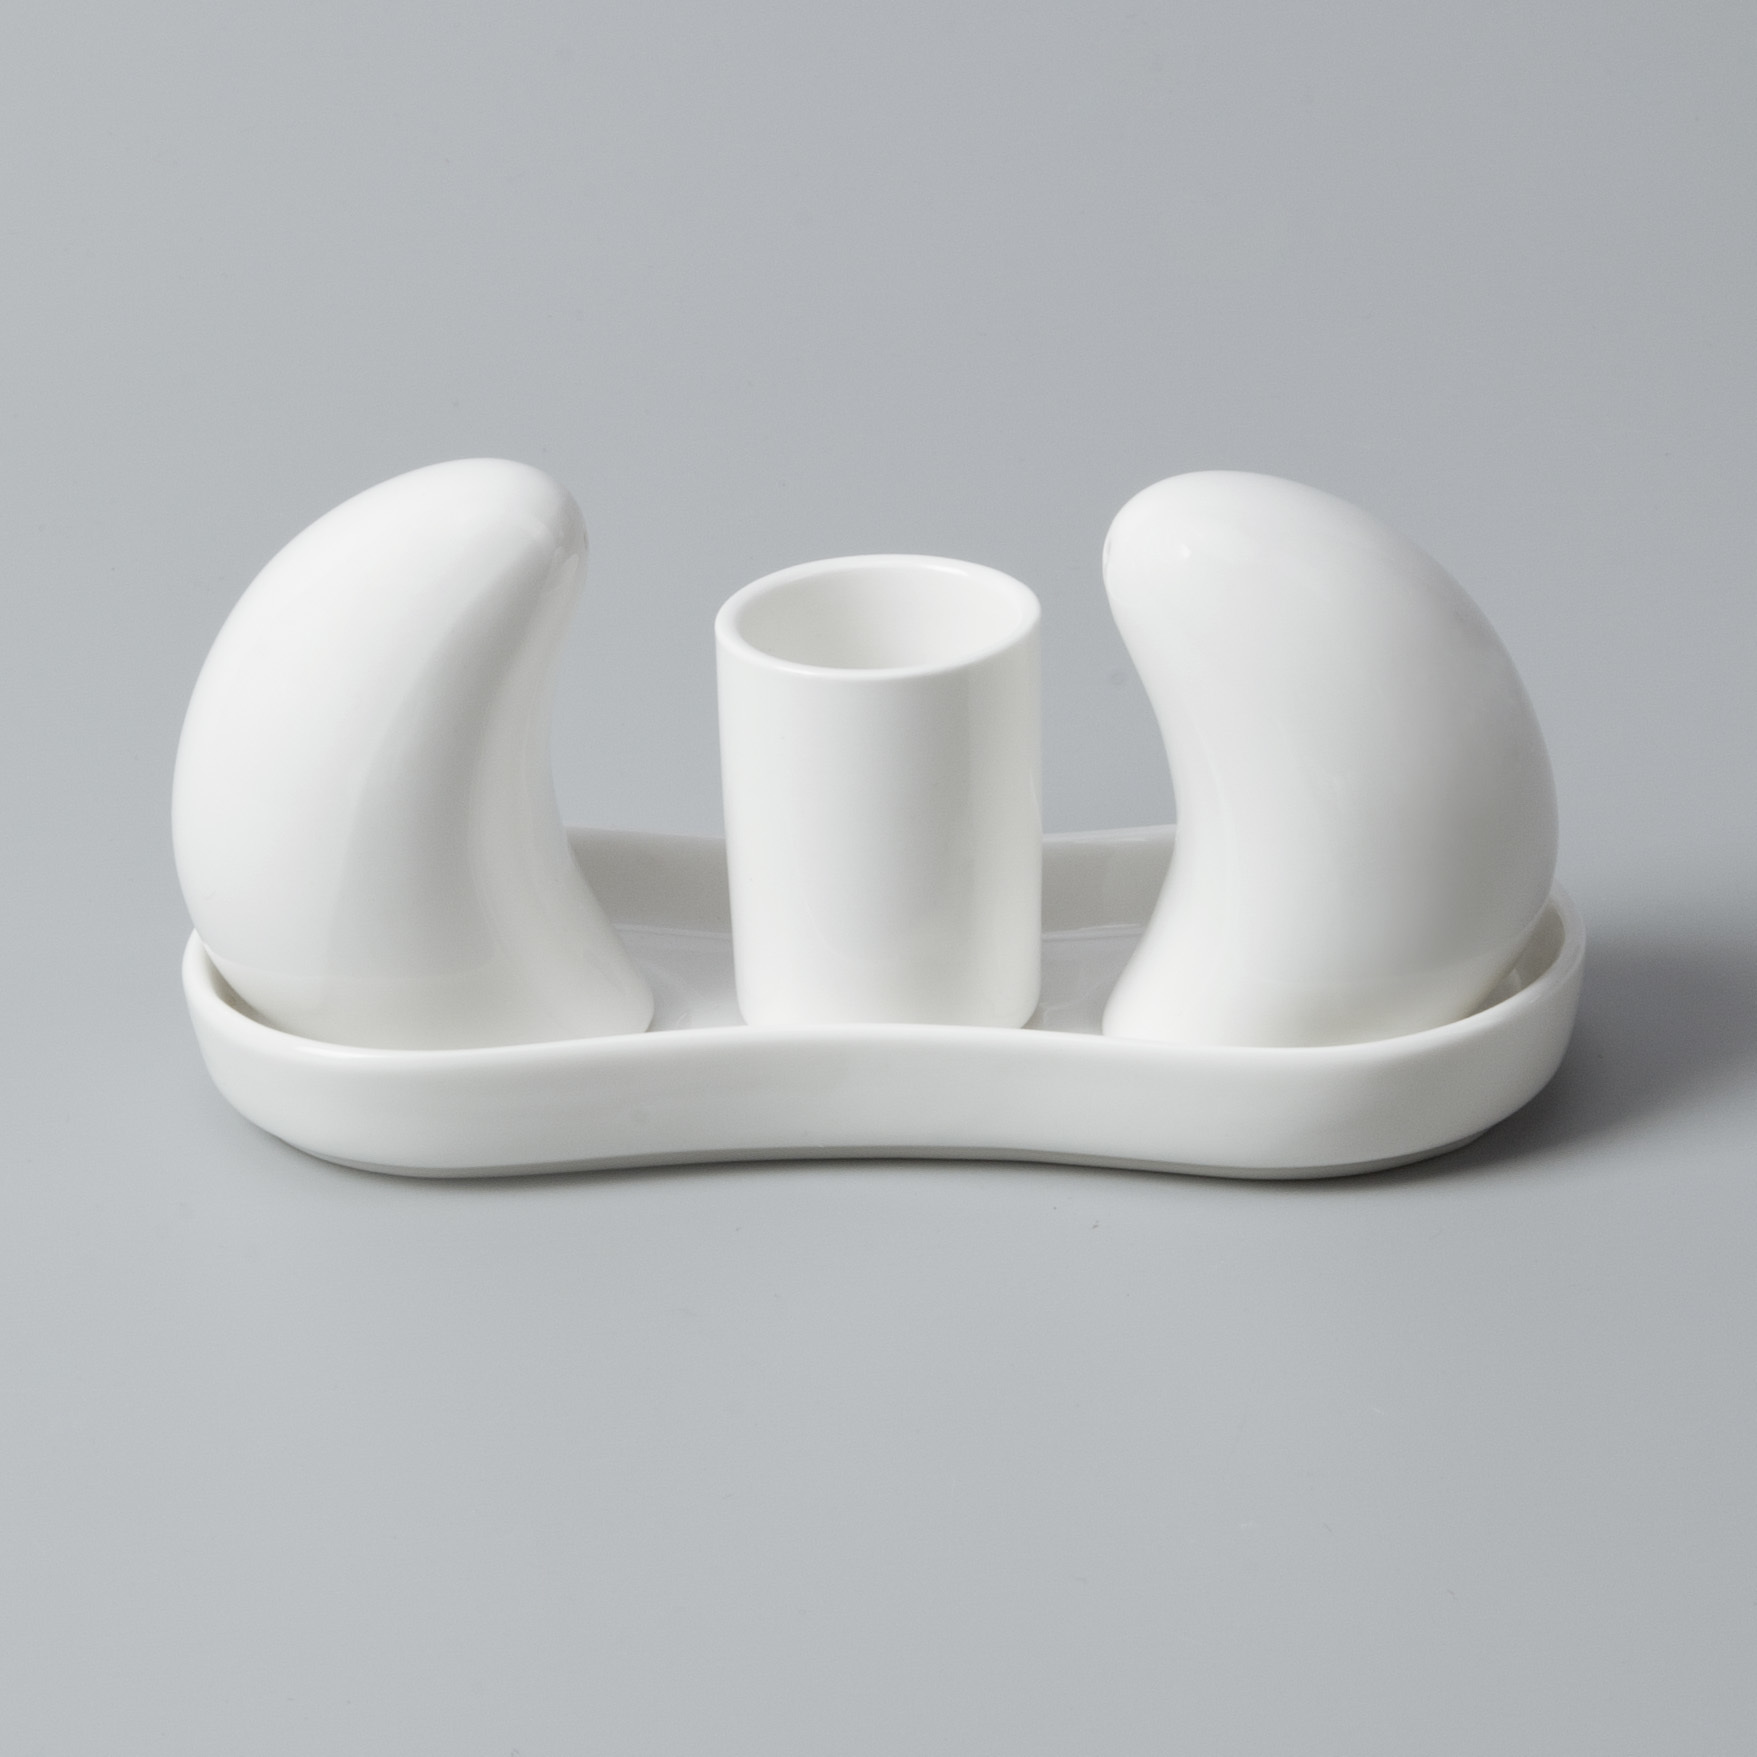 Two Eight Brand dish porcelain white porcelain tableware